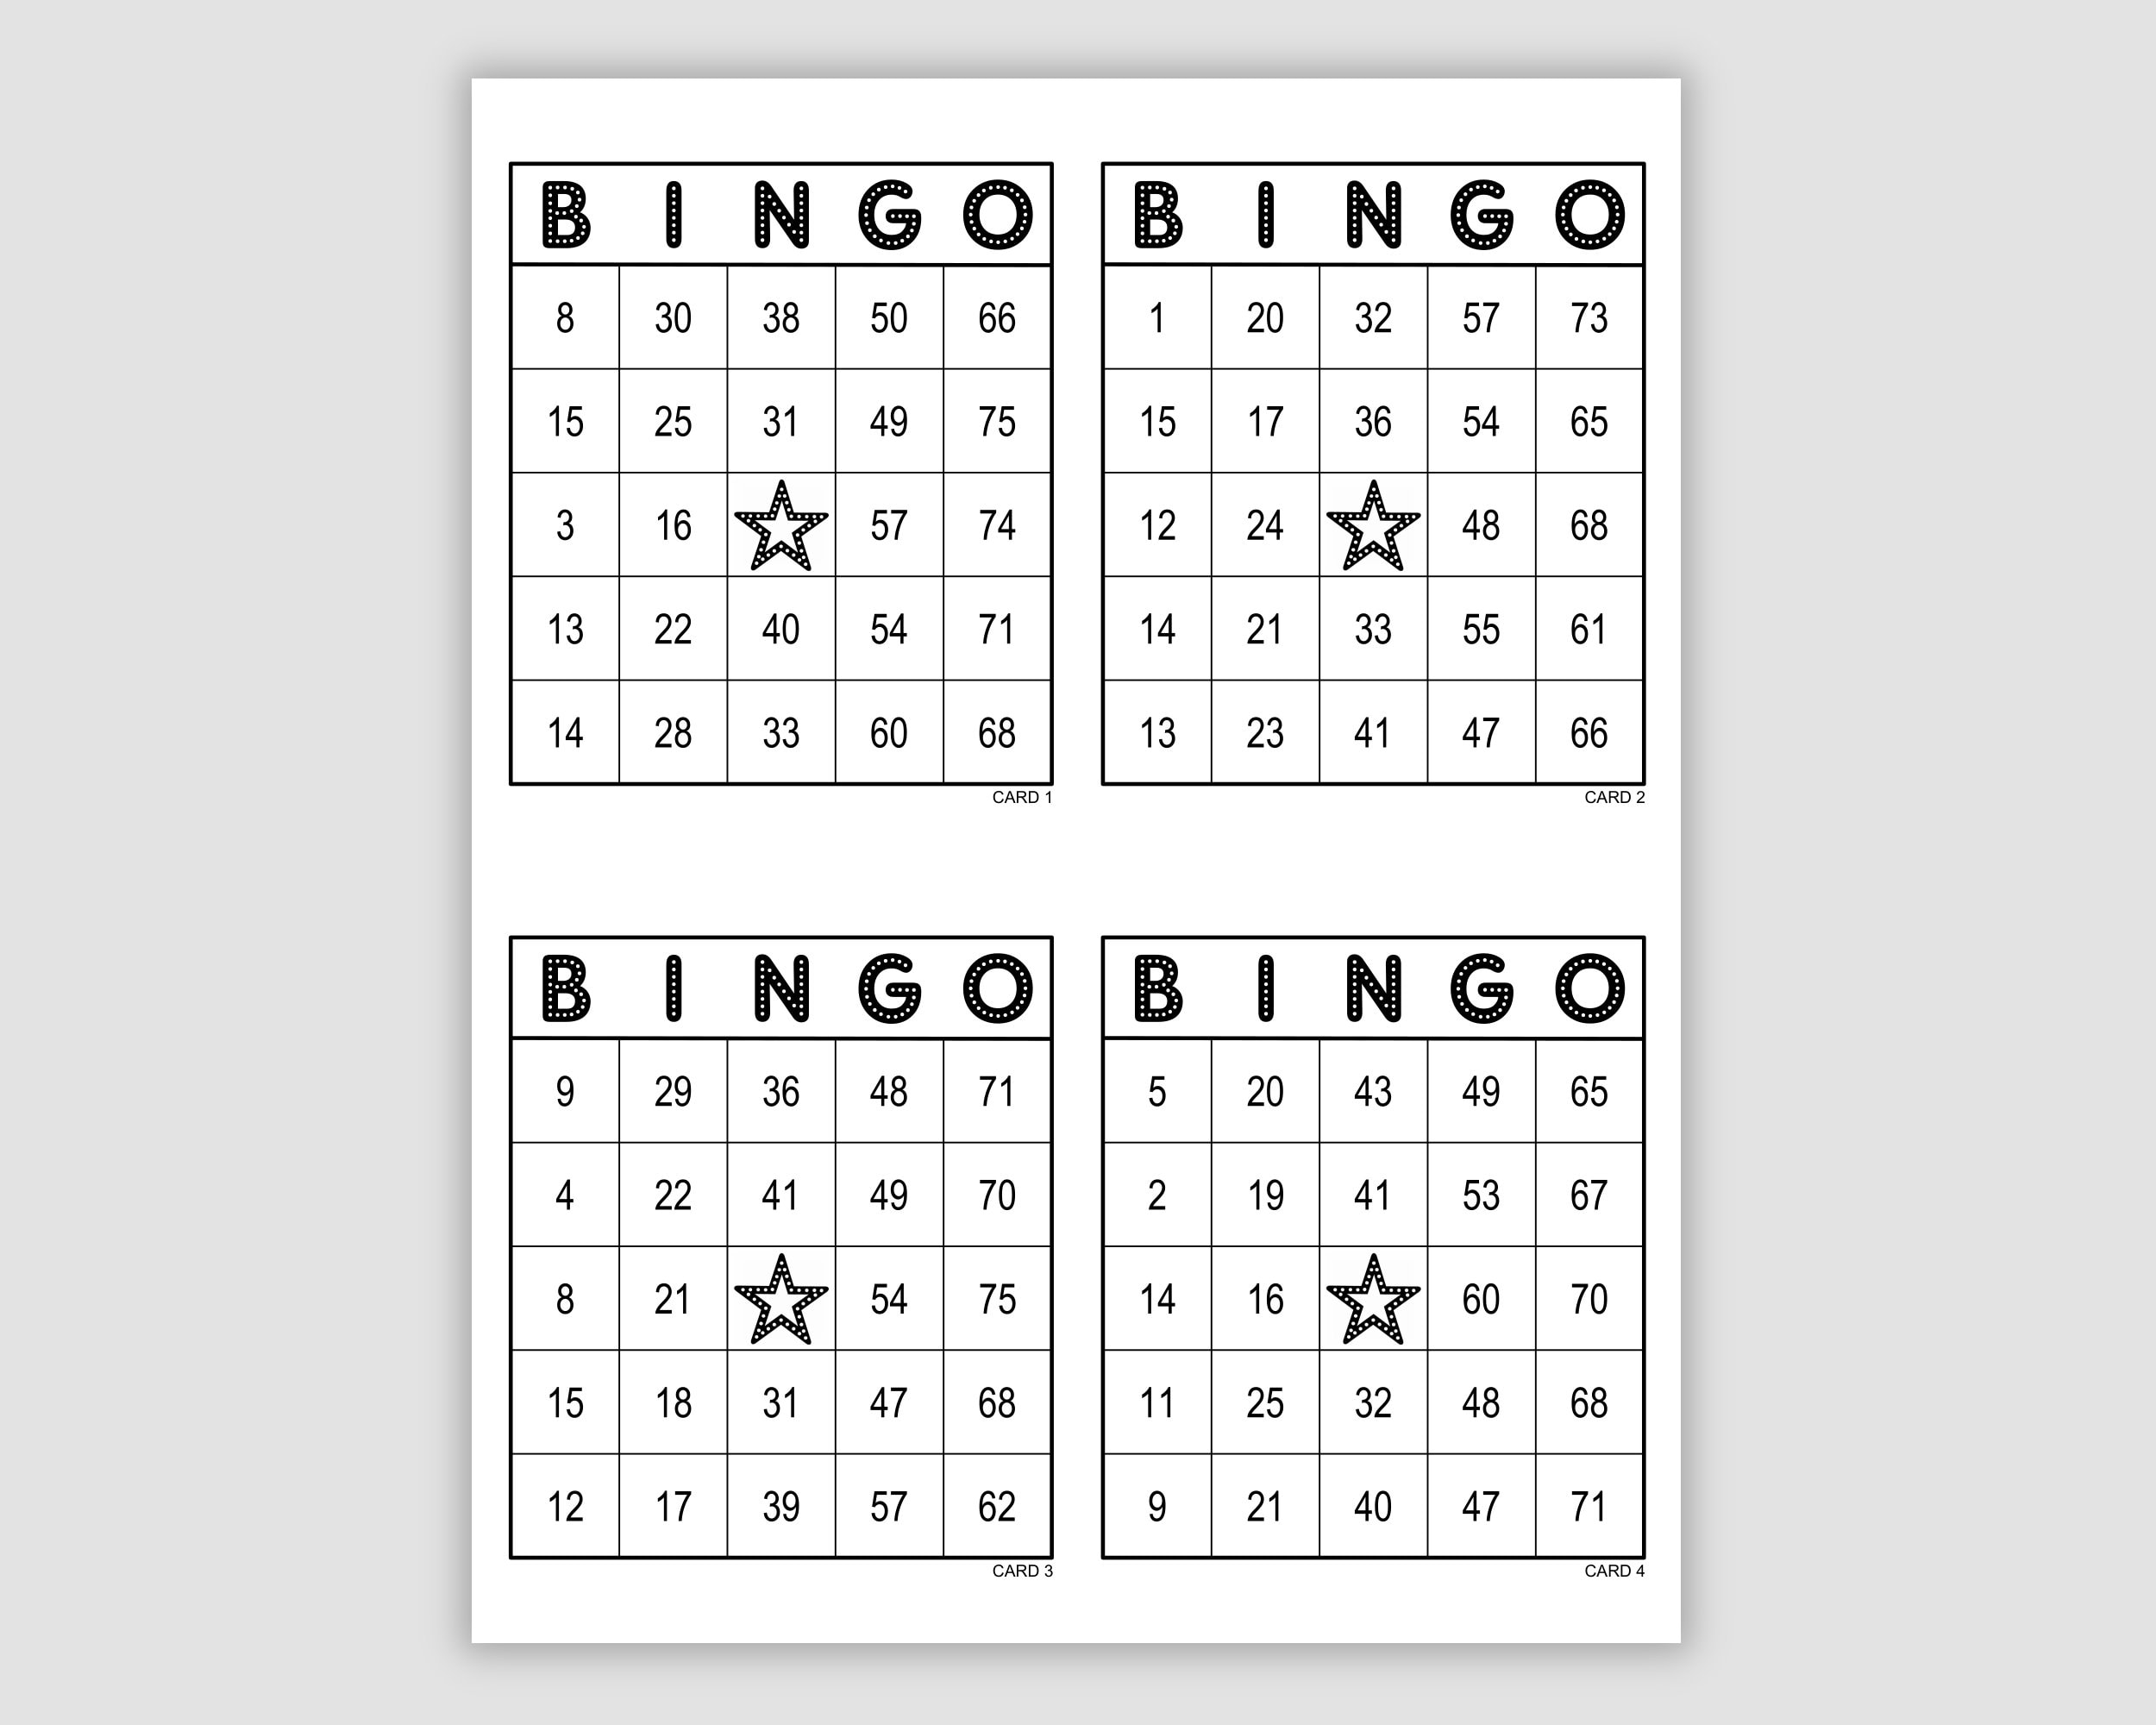 Bingo Seat Cushion with Cushion Back - Lucky Bingo Print